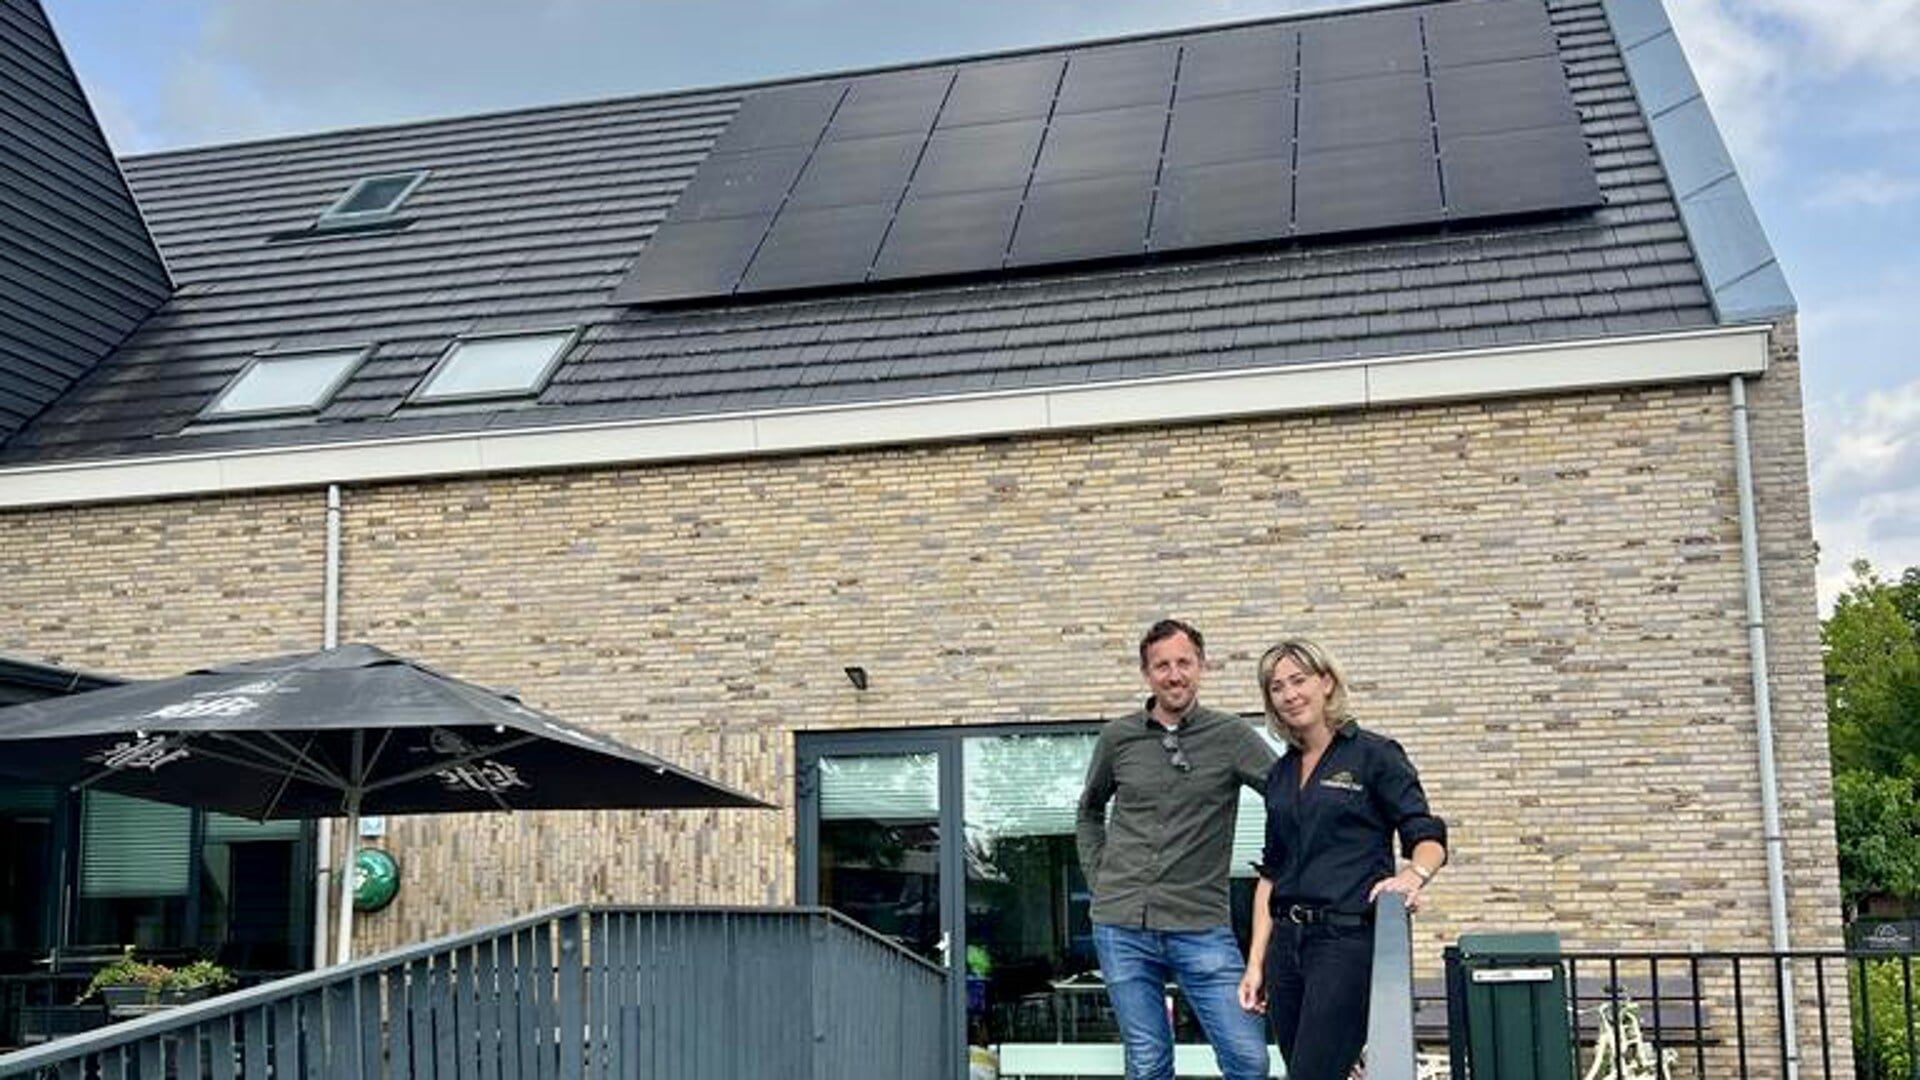 • Joost van der Plas van SolarOplossing en beheerder Janine Korevaar van ’t Wingerds Hof.